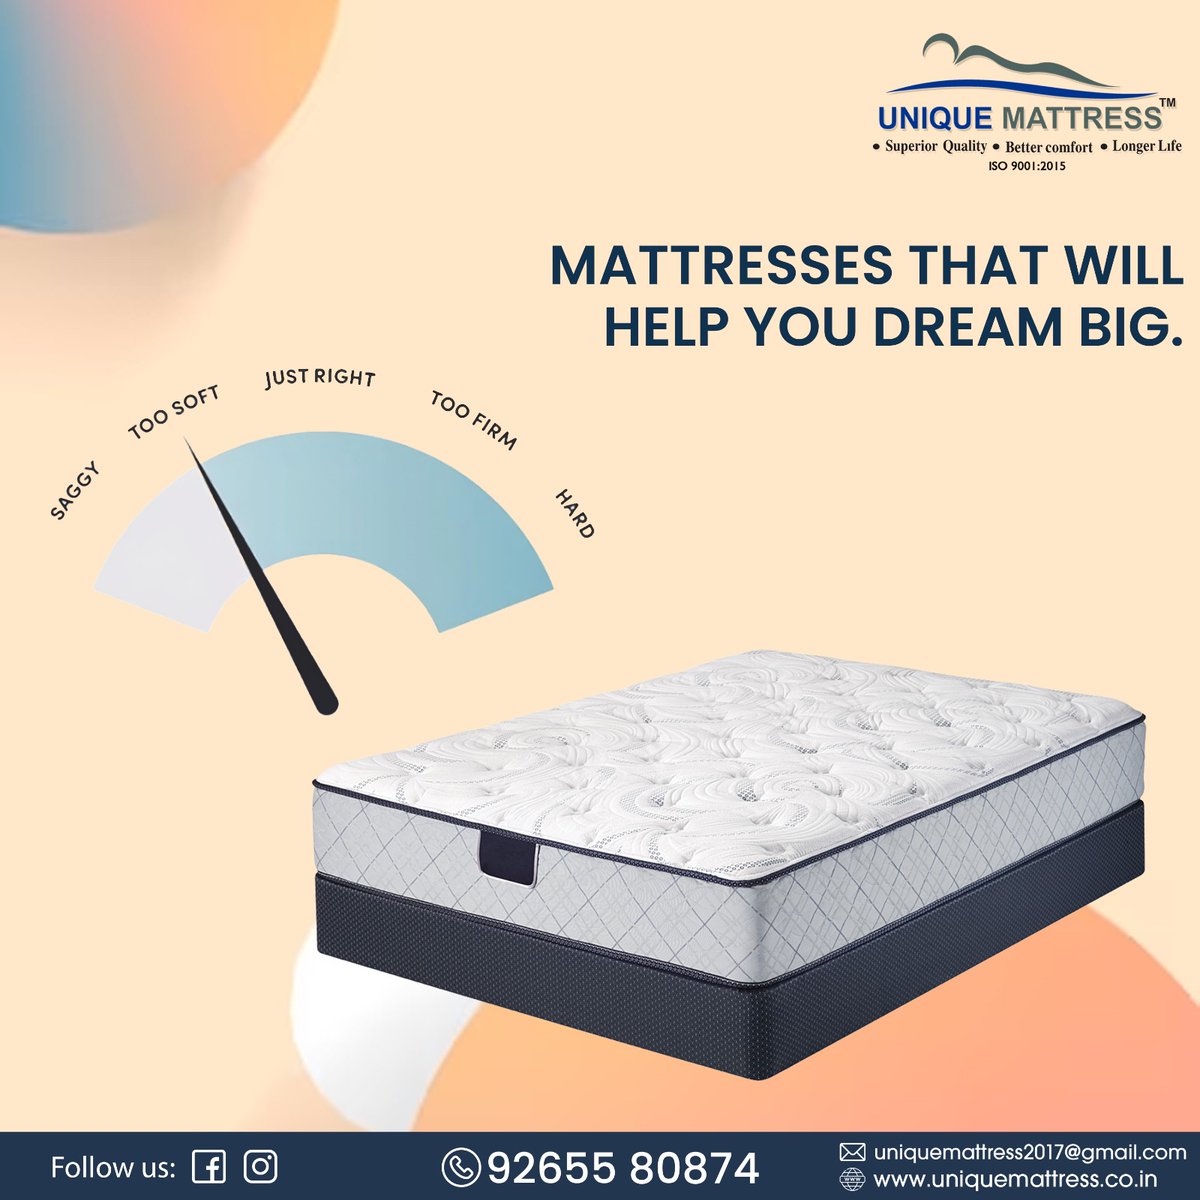 Comfortable mattress for your perfect bed.
Order now:-  092655 80874
.
.
.
#uniquemattress #mattress #interior #khushali #happineshome #softmattress #bed #bedroom #15years #bedmattress #bestoffersindia #rajkotinstagram #rajkot_igers #rajkotgujrat #bapunagar #gujarat #bestsleep